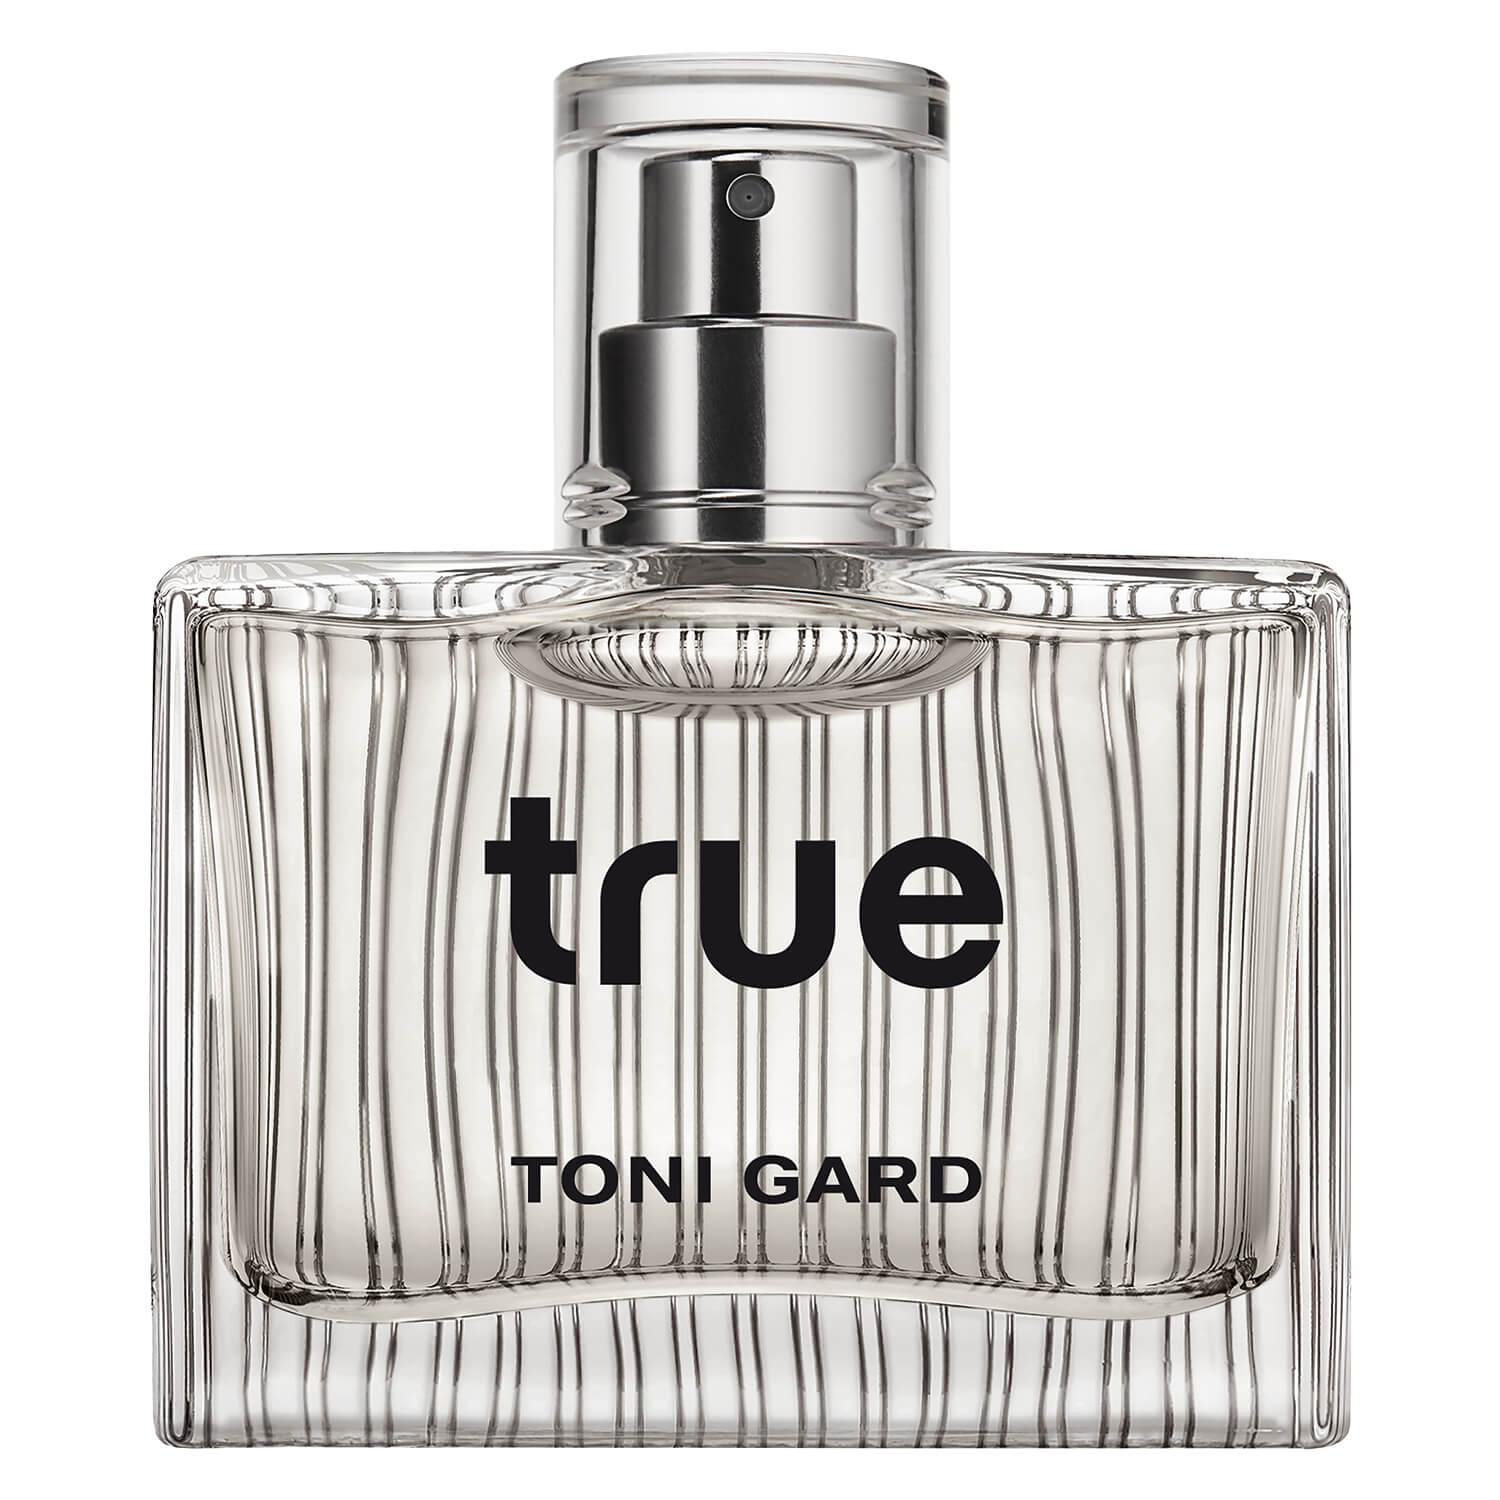 TONI GARD - True Woman Eau de Parfum